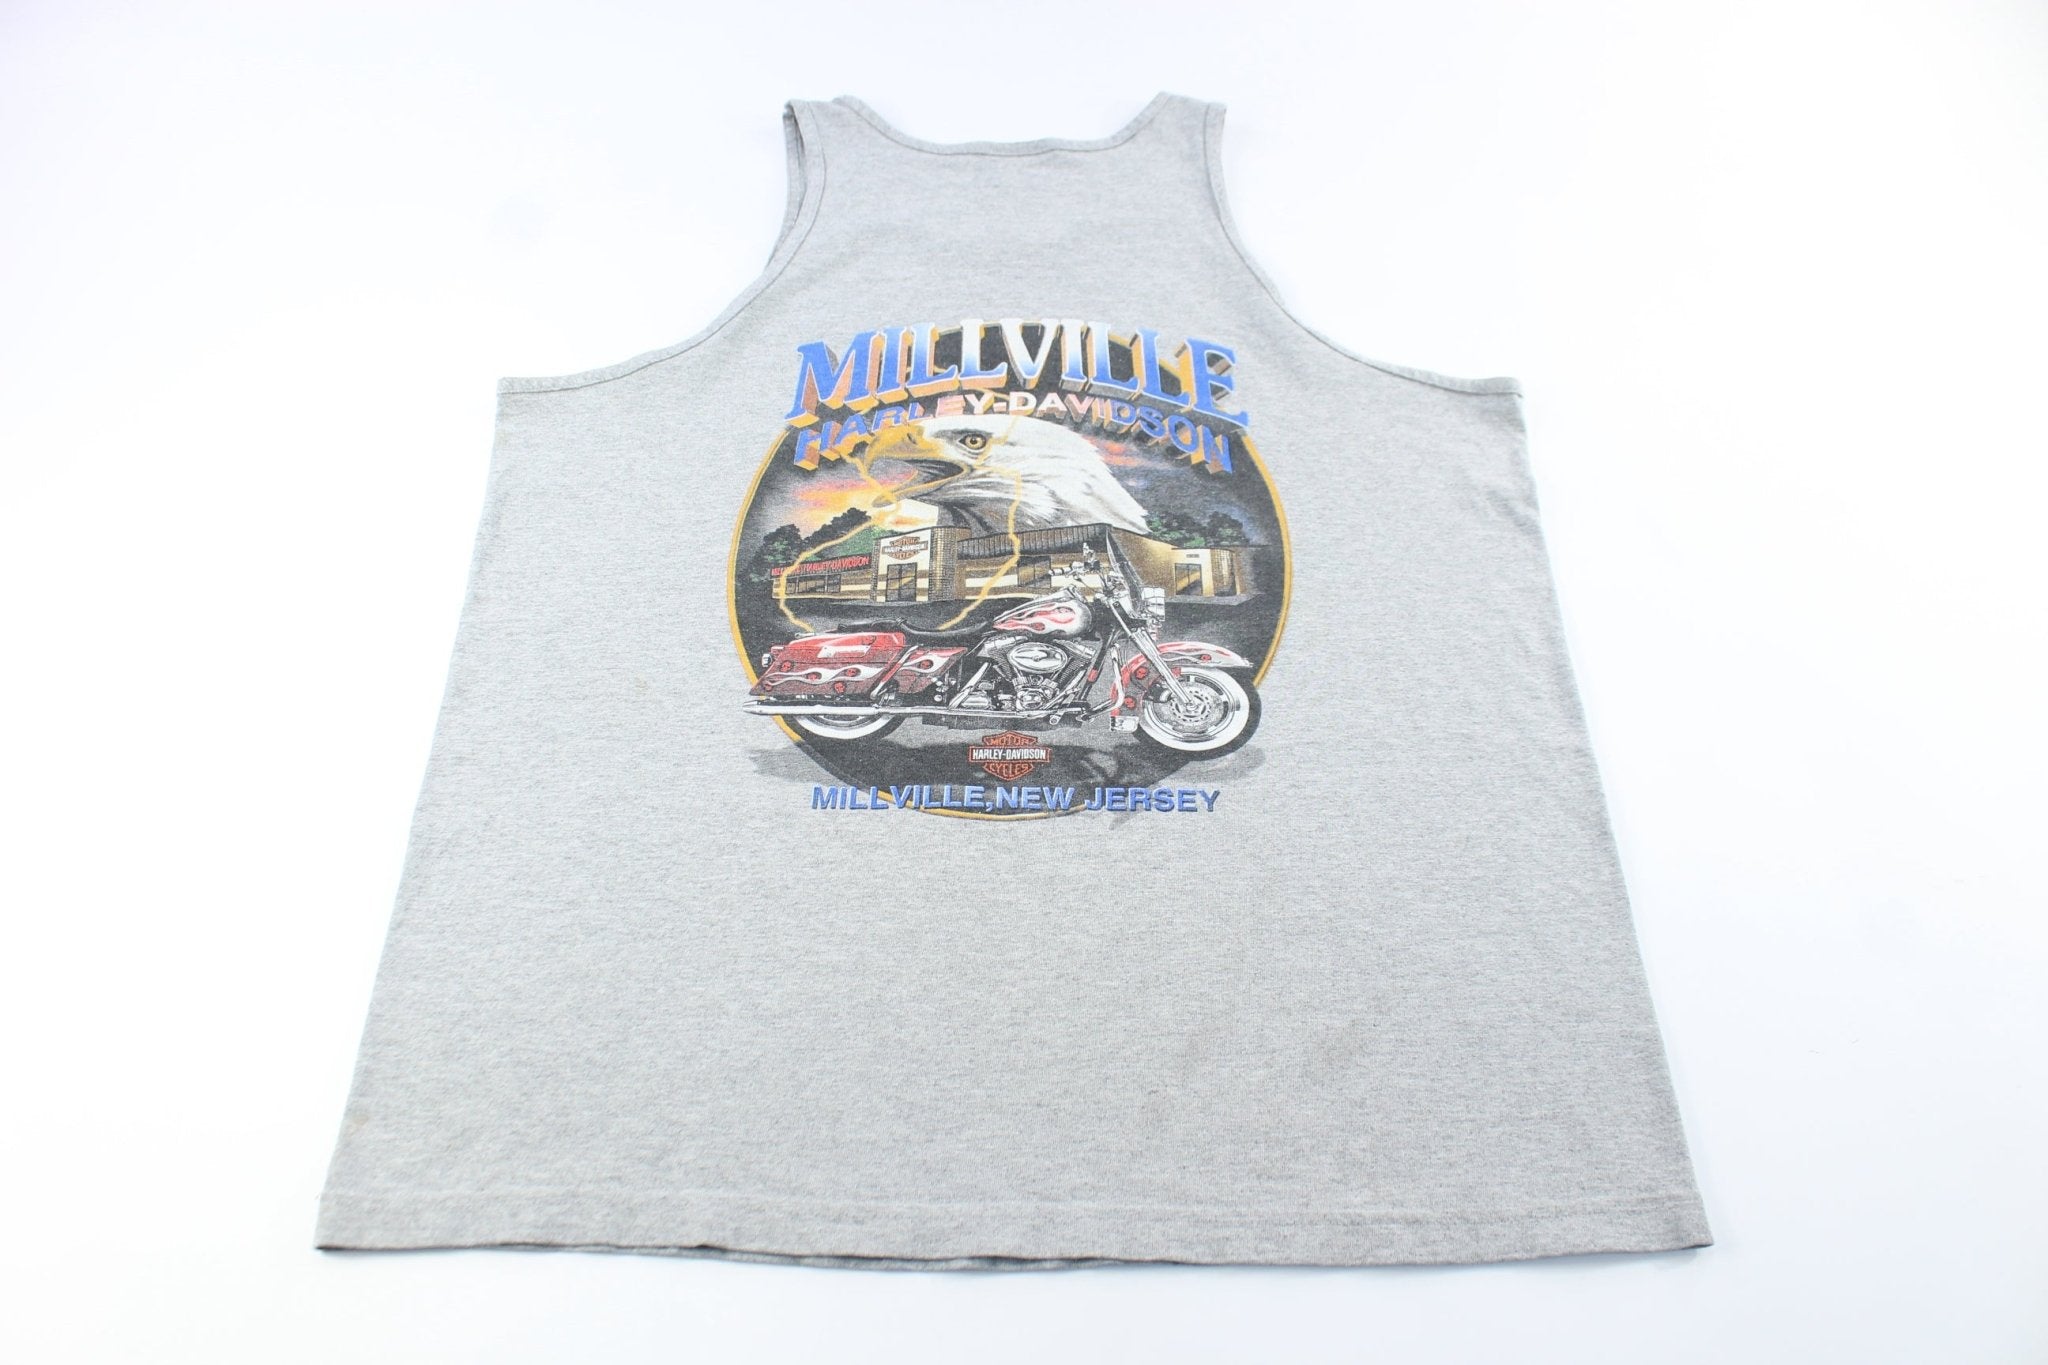 Harley Davidson Motorcycles Millville, New Jersey Tank Top - ThriftedThreads.com